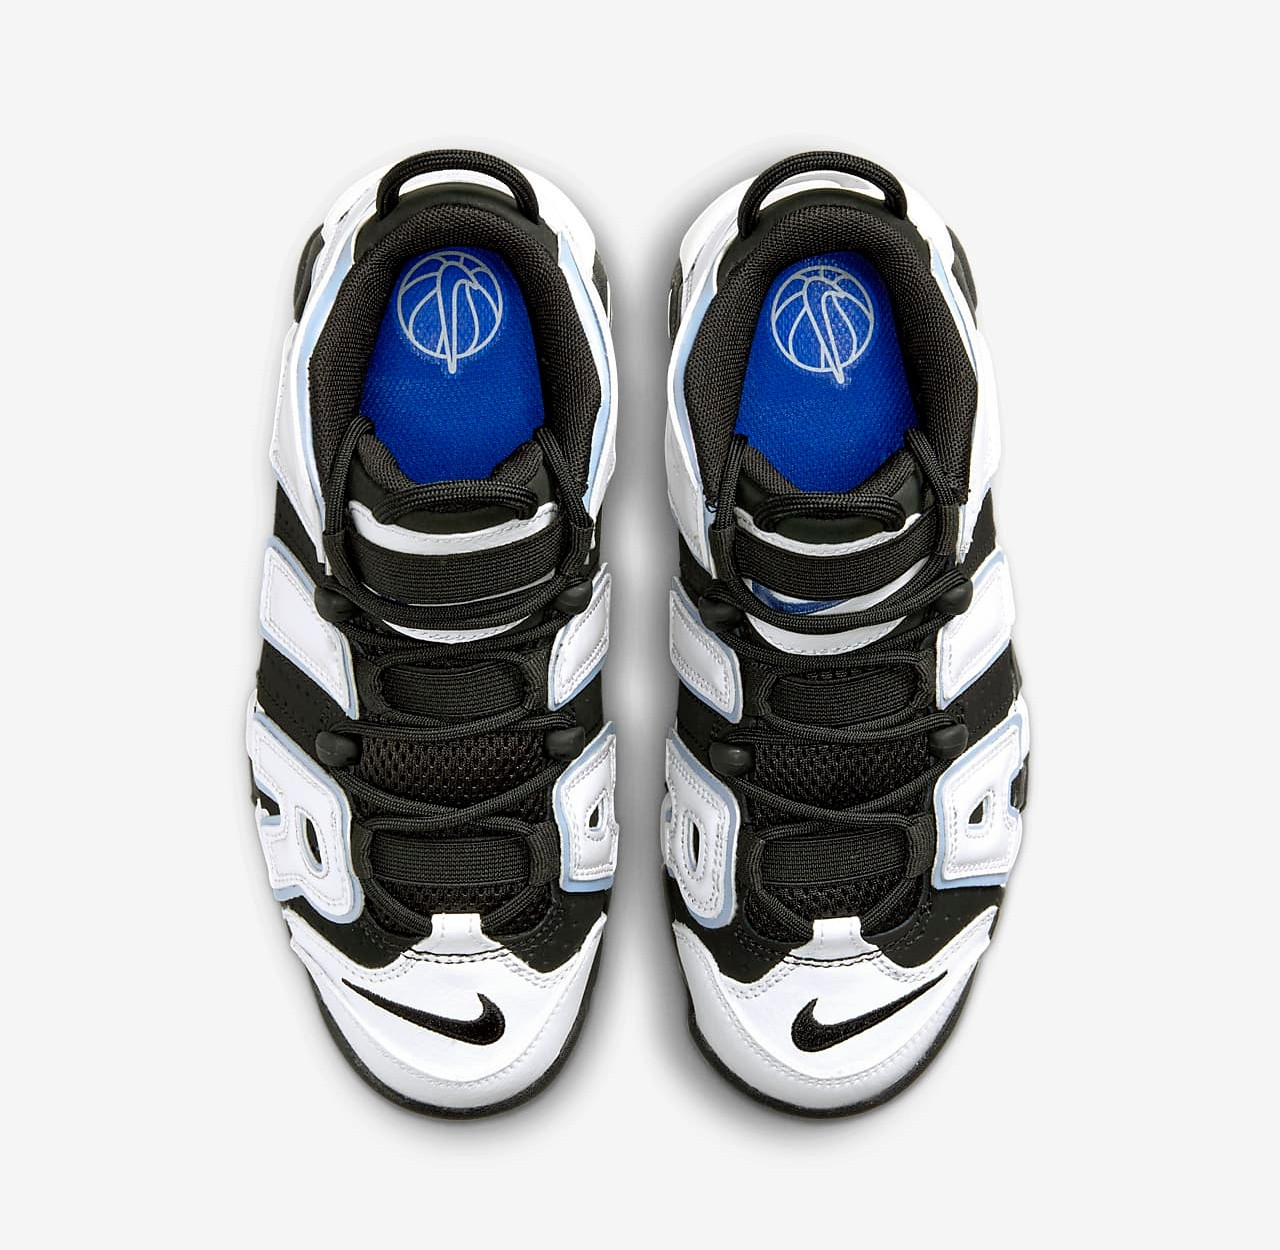  Nike mens Air More Uptempo 96 Shoes, Black/White-multi-color,  13